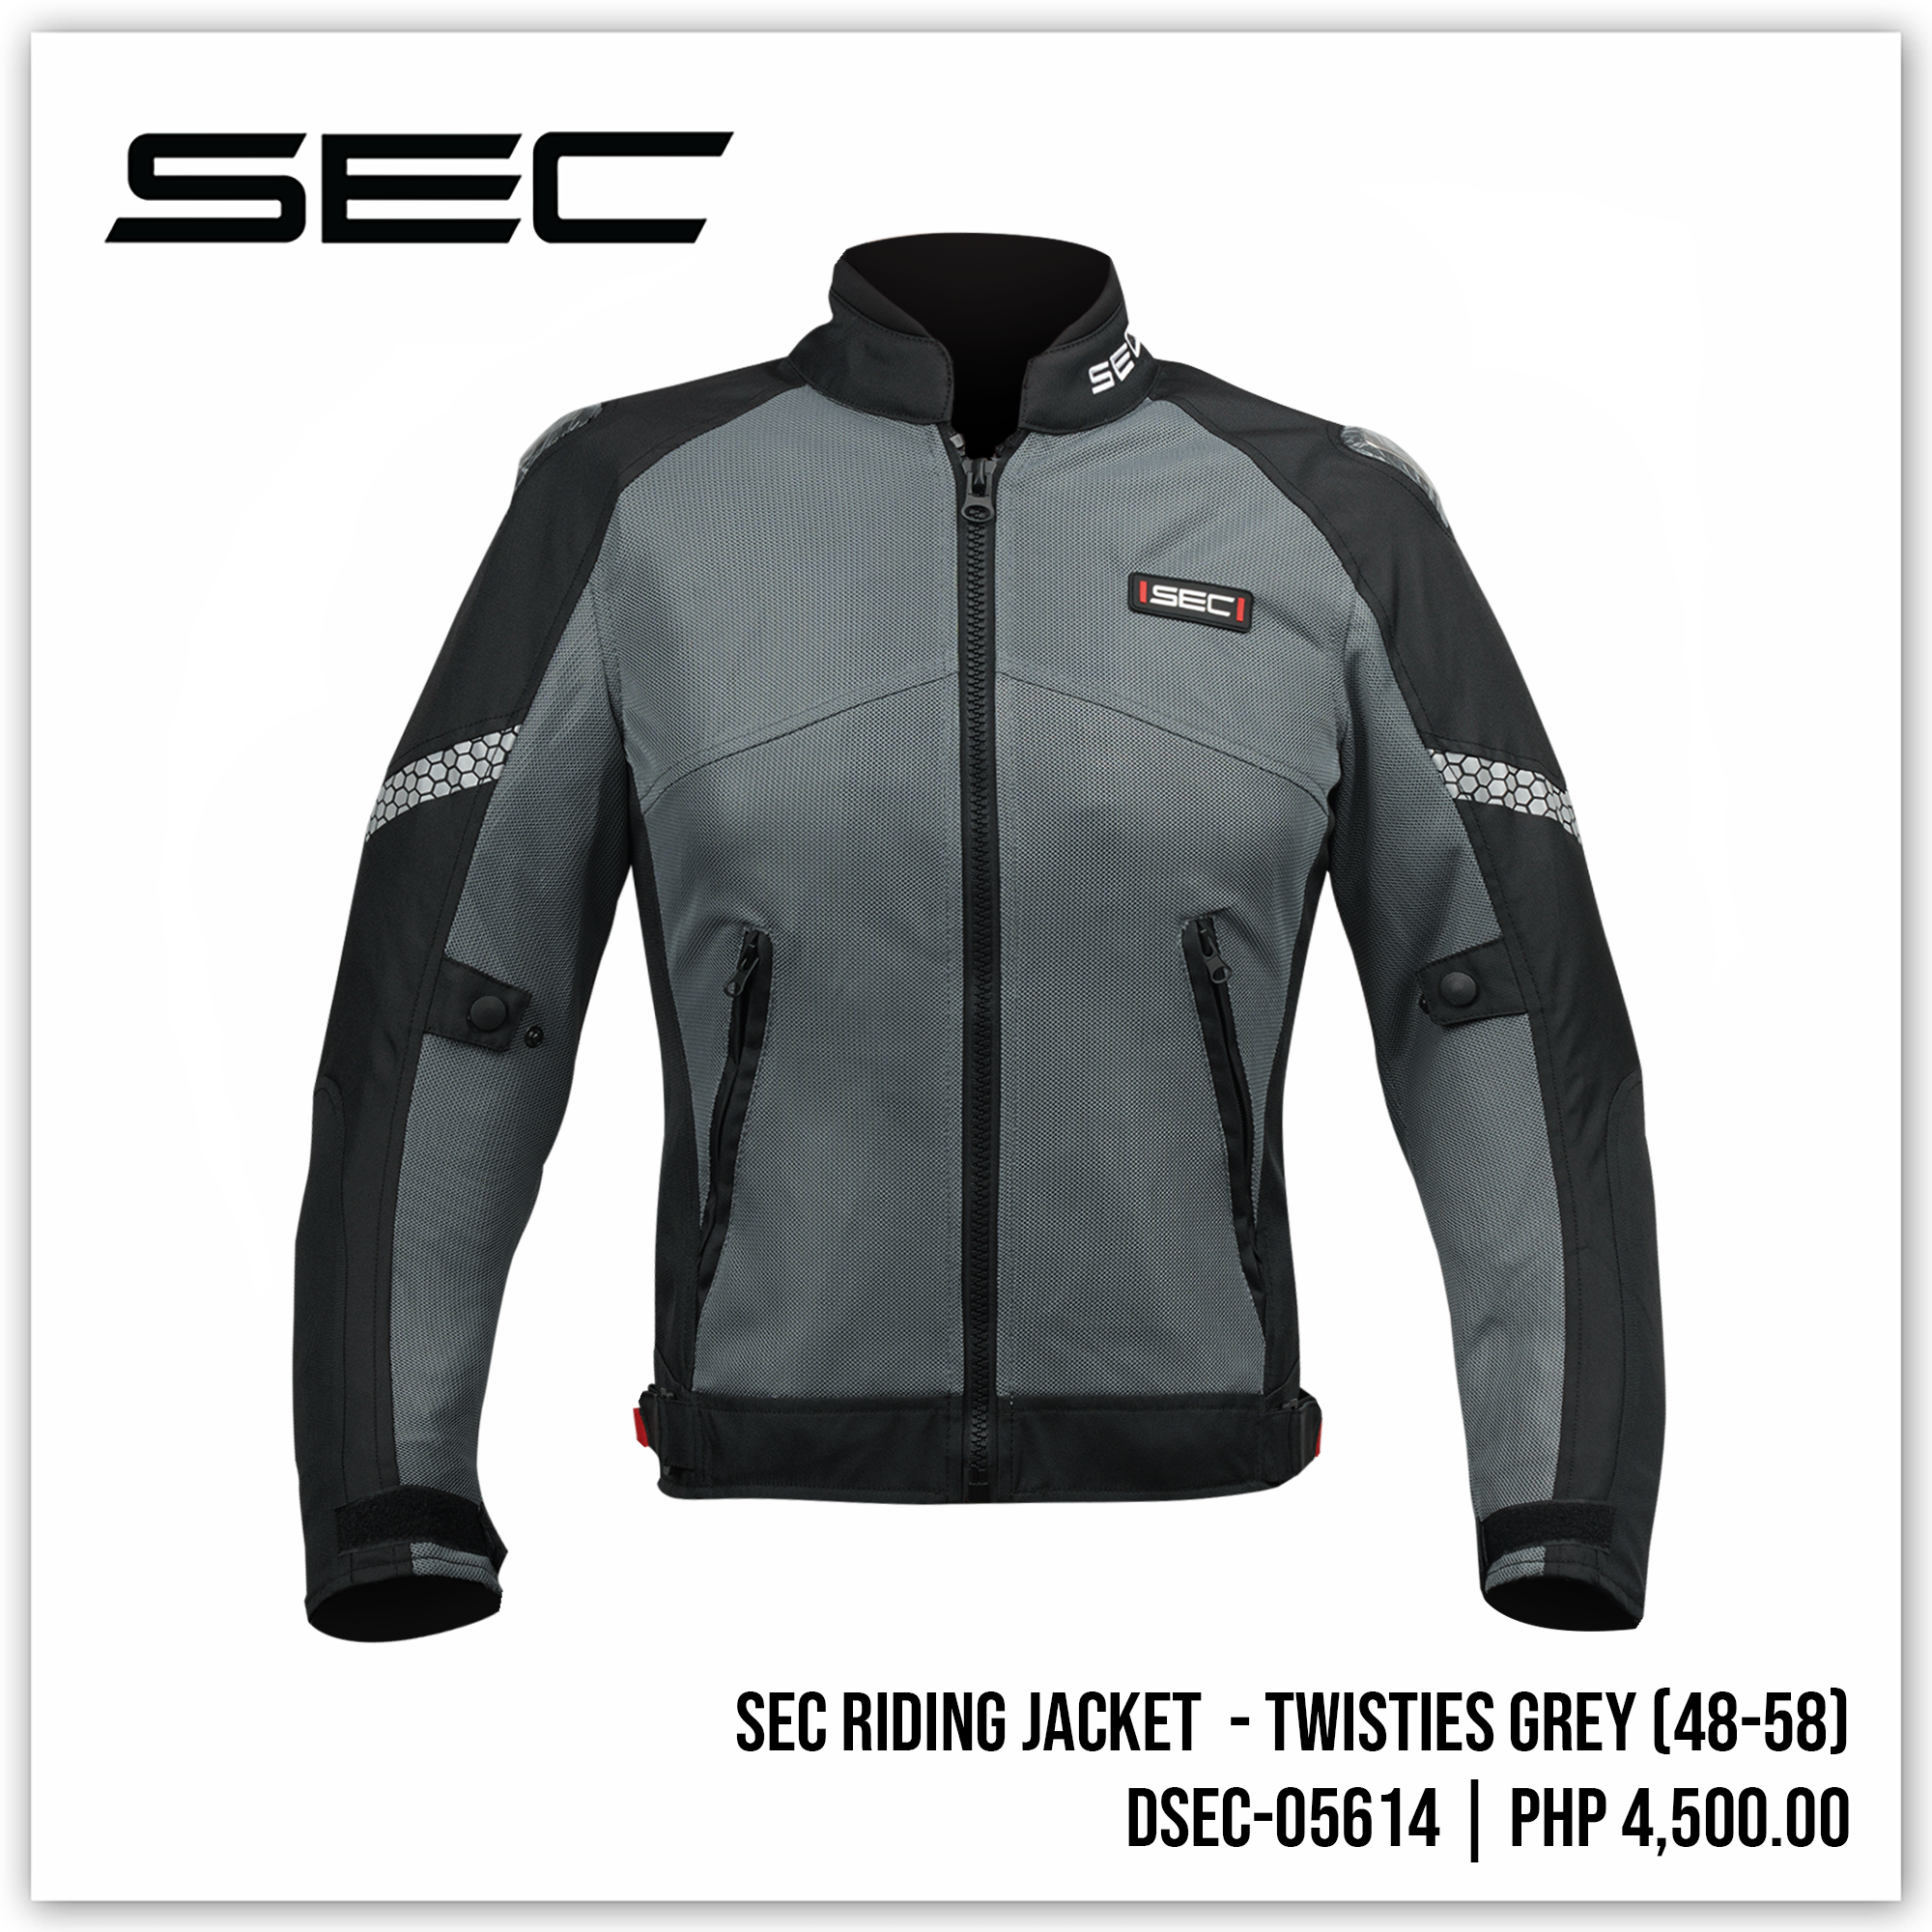 SEC Riding Jacket - Twisties Grey